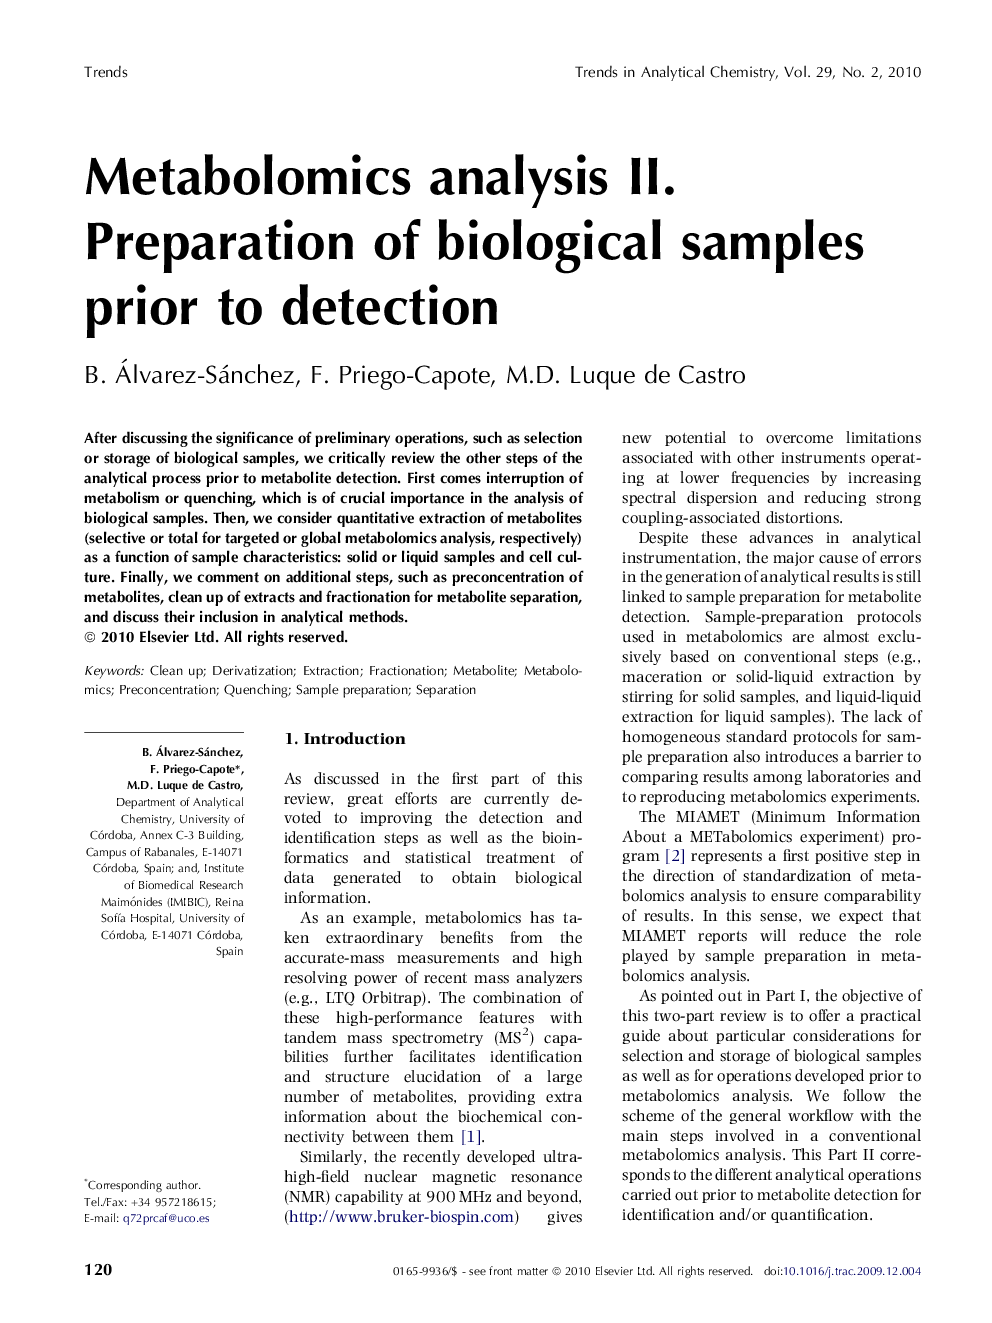 Metabolomics analysis II. Preparation of biological samples prior to detection